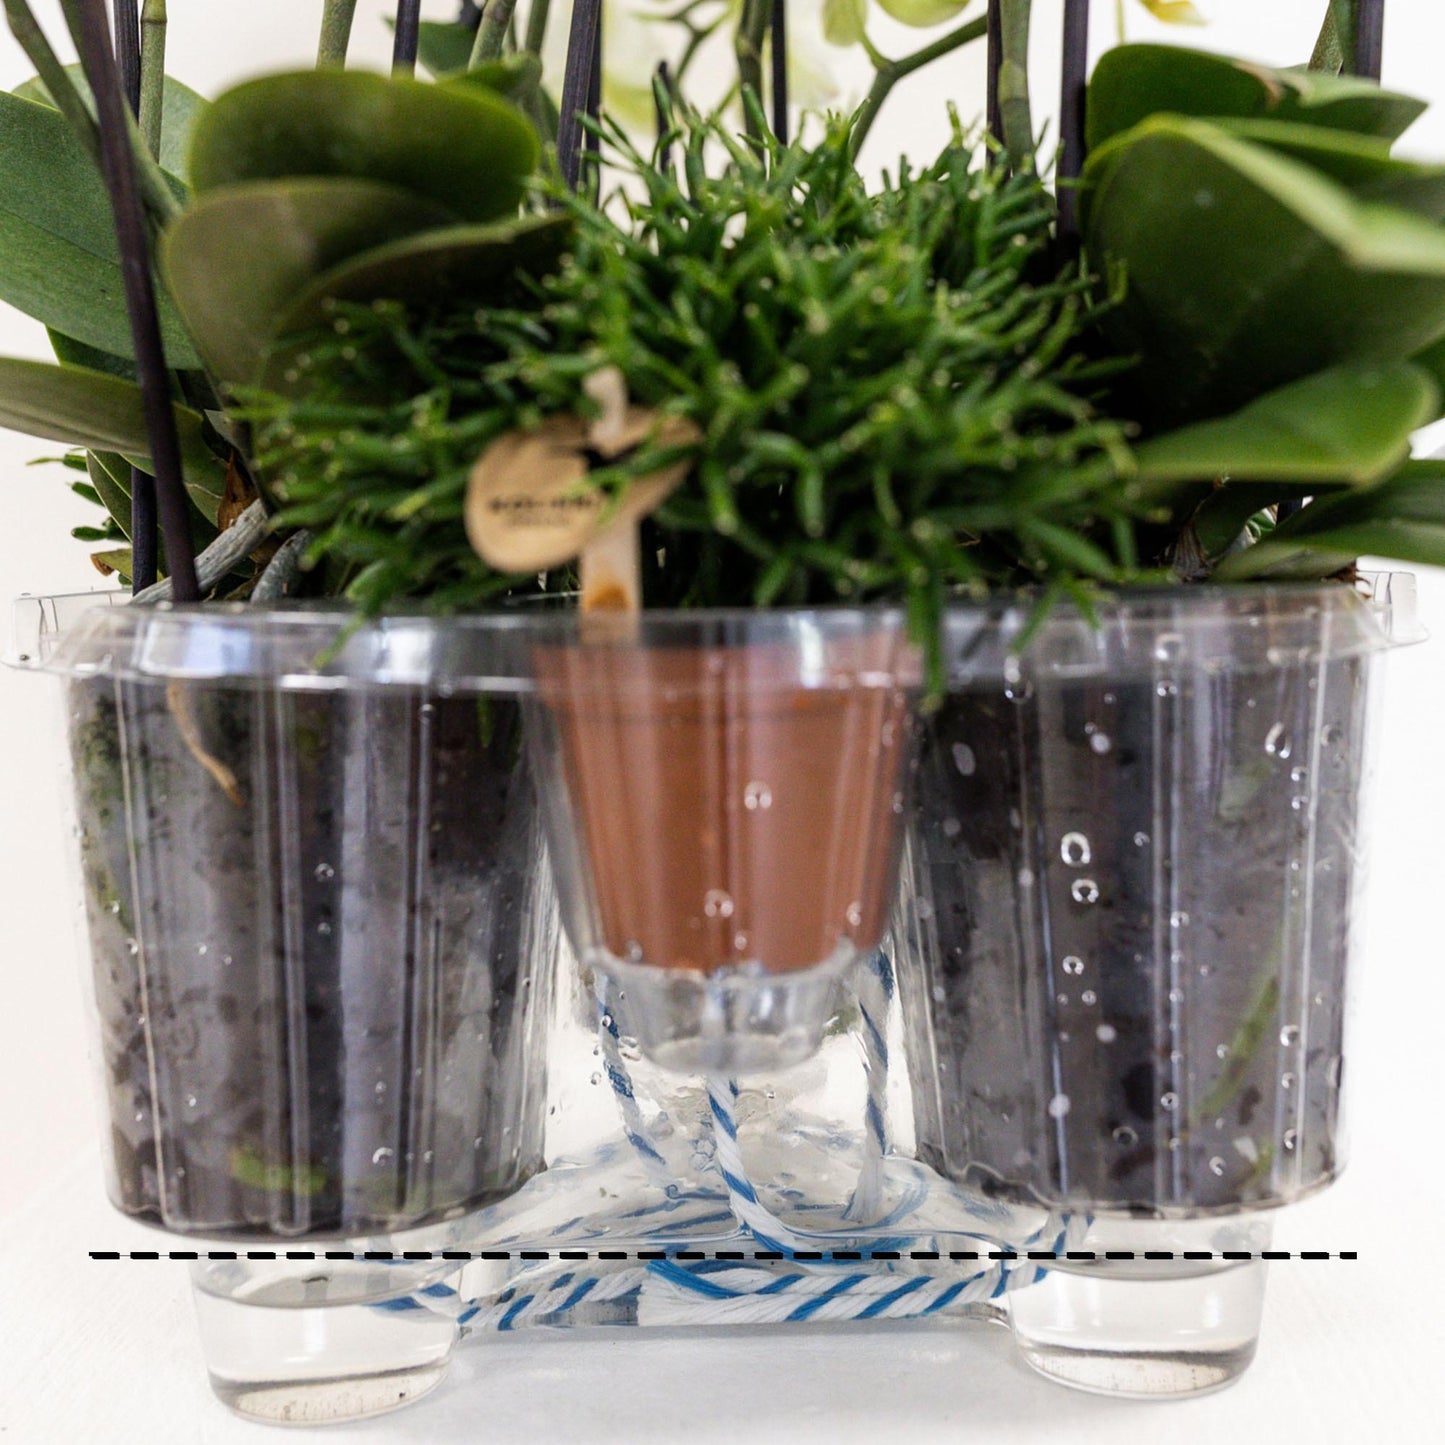 Kolibri Orchids | paarse plantenset in Reed Basket incl. waterreservoir | drie paarse orchideeën Morelia 9cm en drie groene planten Rhipsalis | Jungle Bouquet paars met zelfvoorzienend waterreservoir